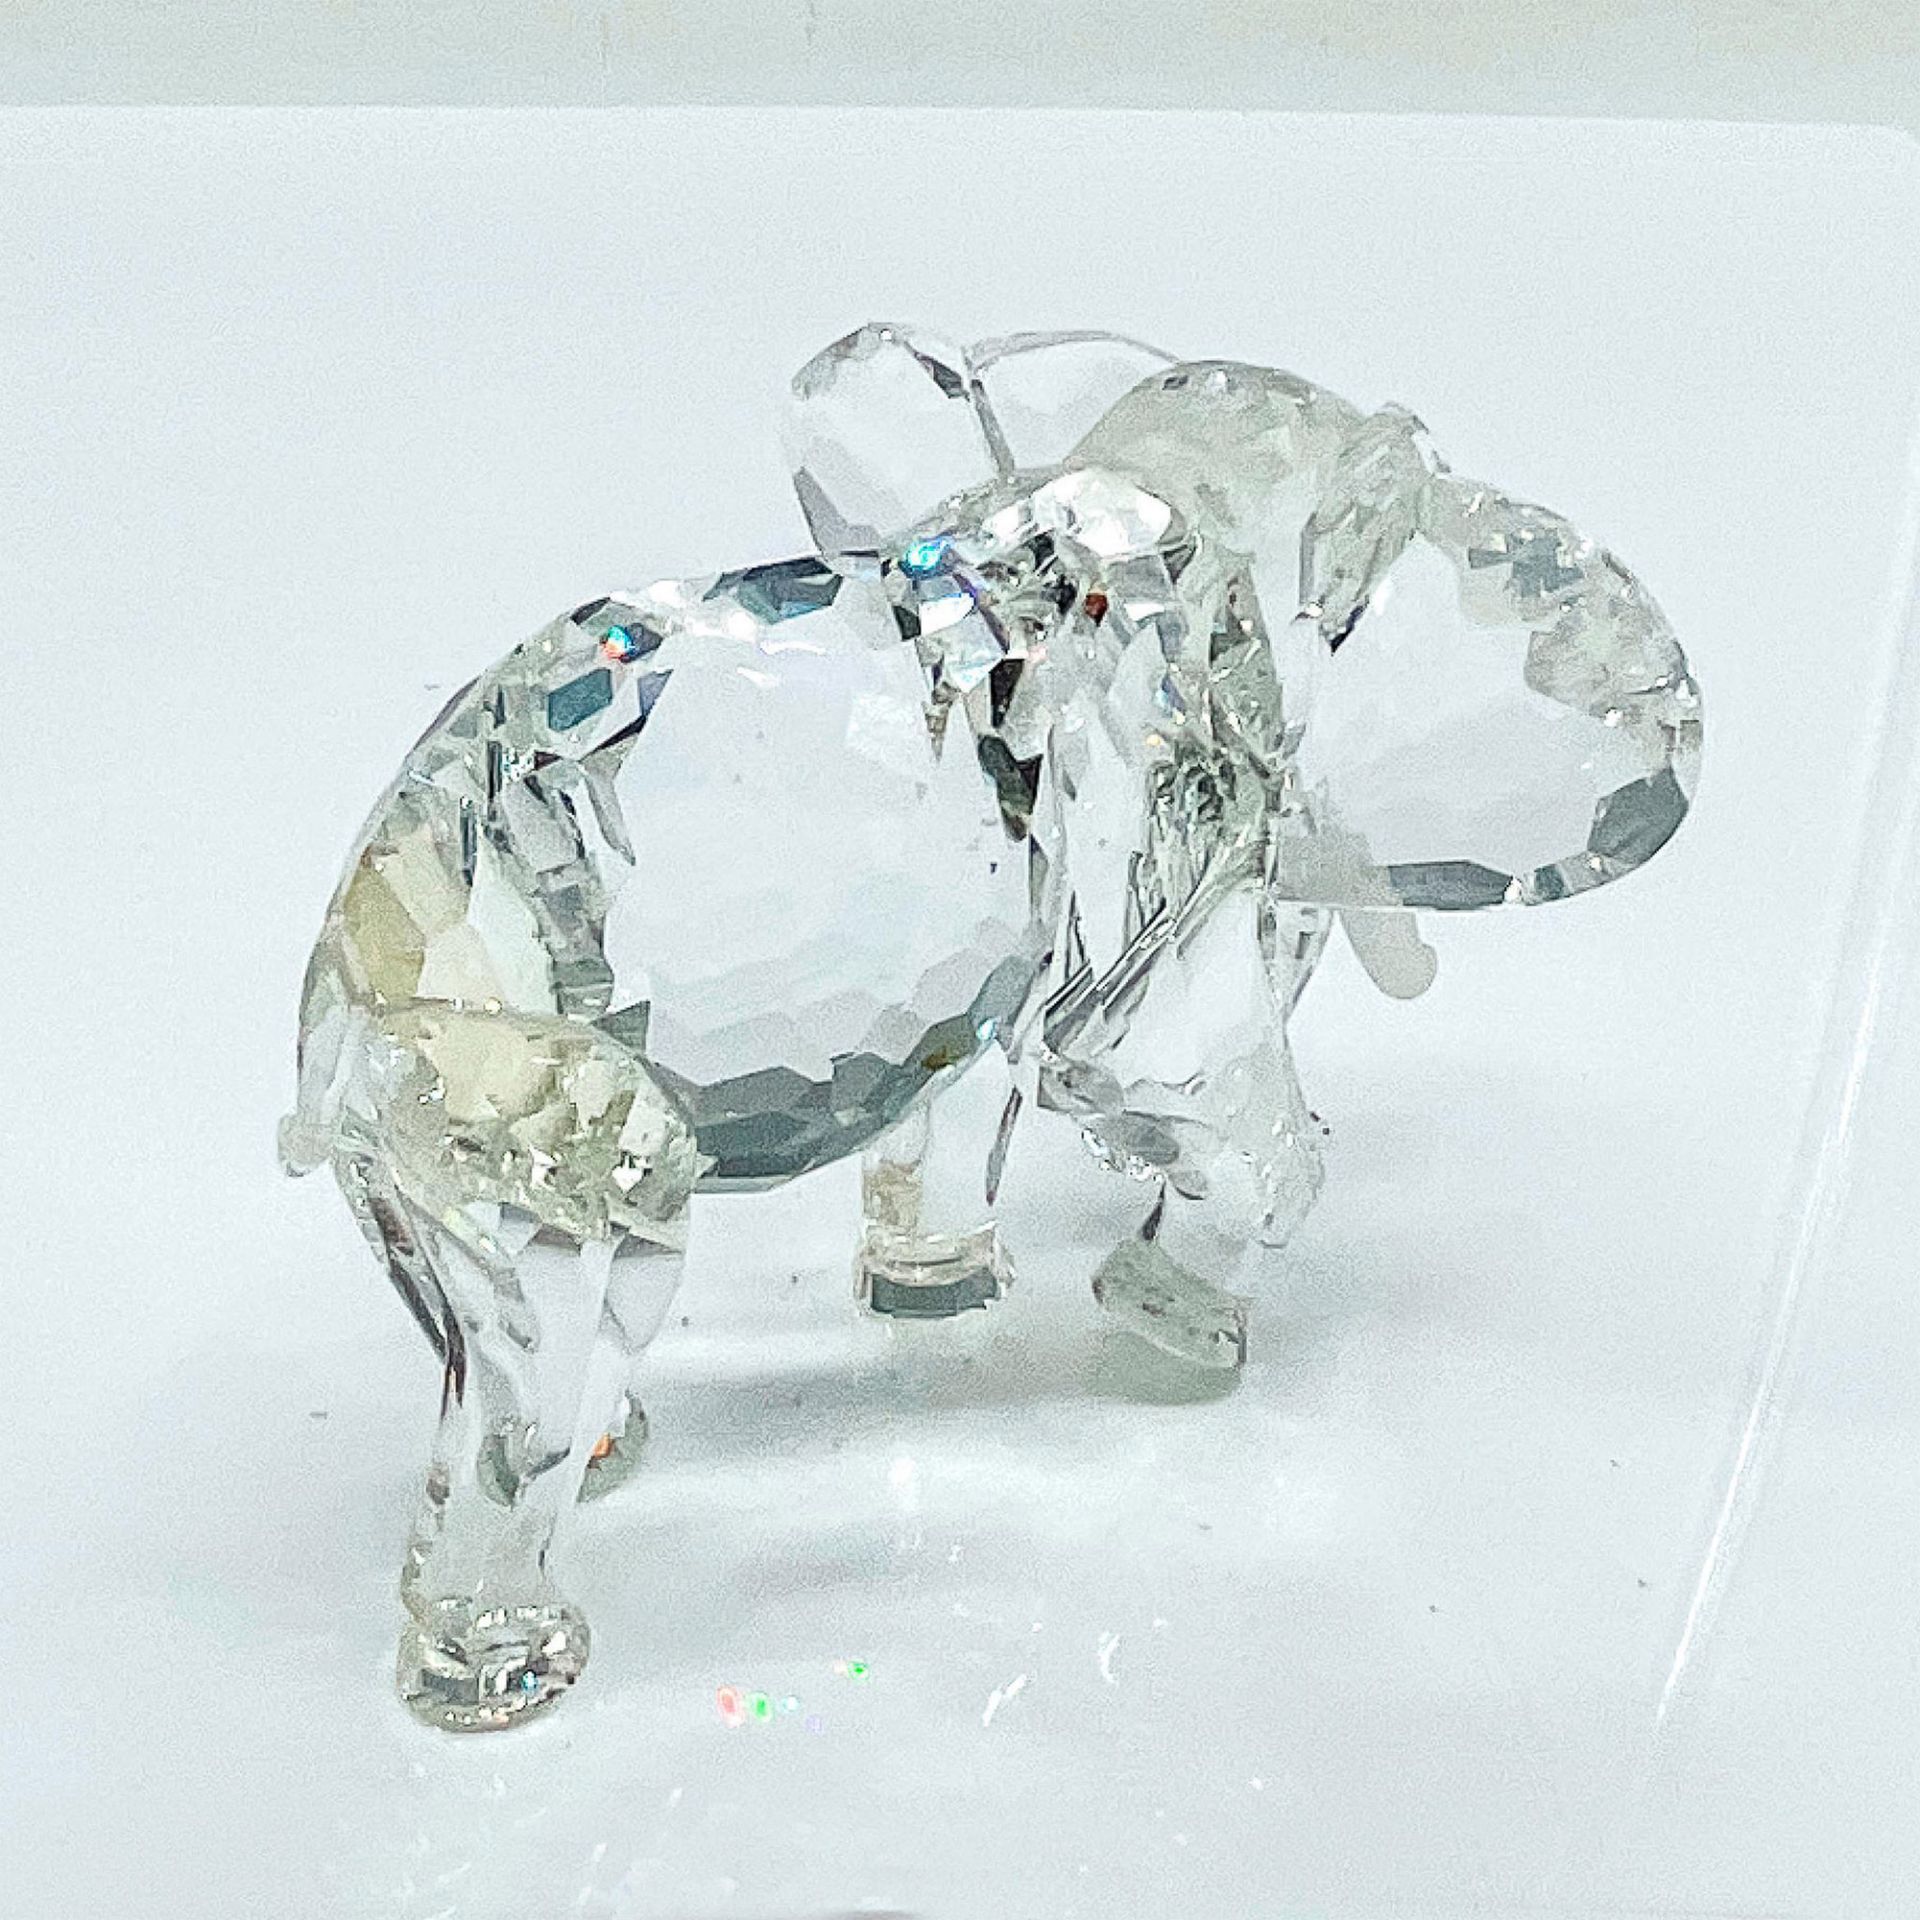 Swarovski Crystal Figurine, Elephant - Image 2 of 4